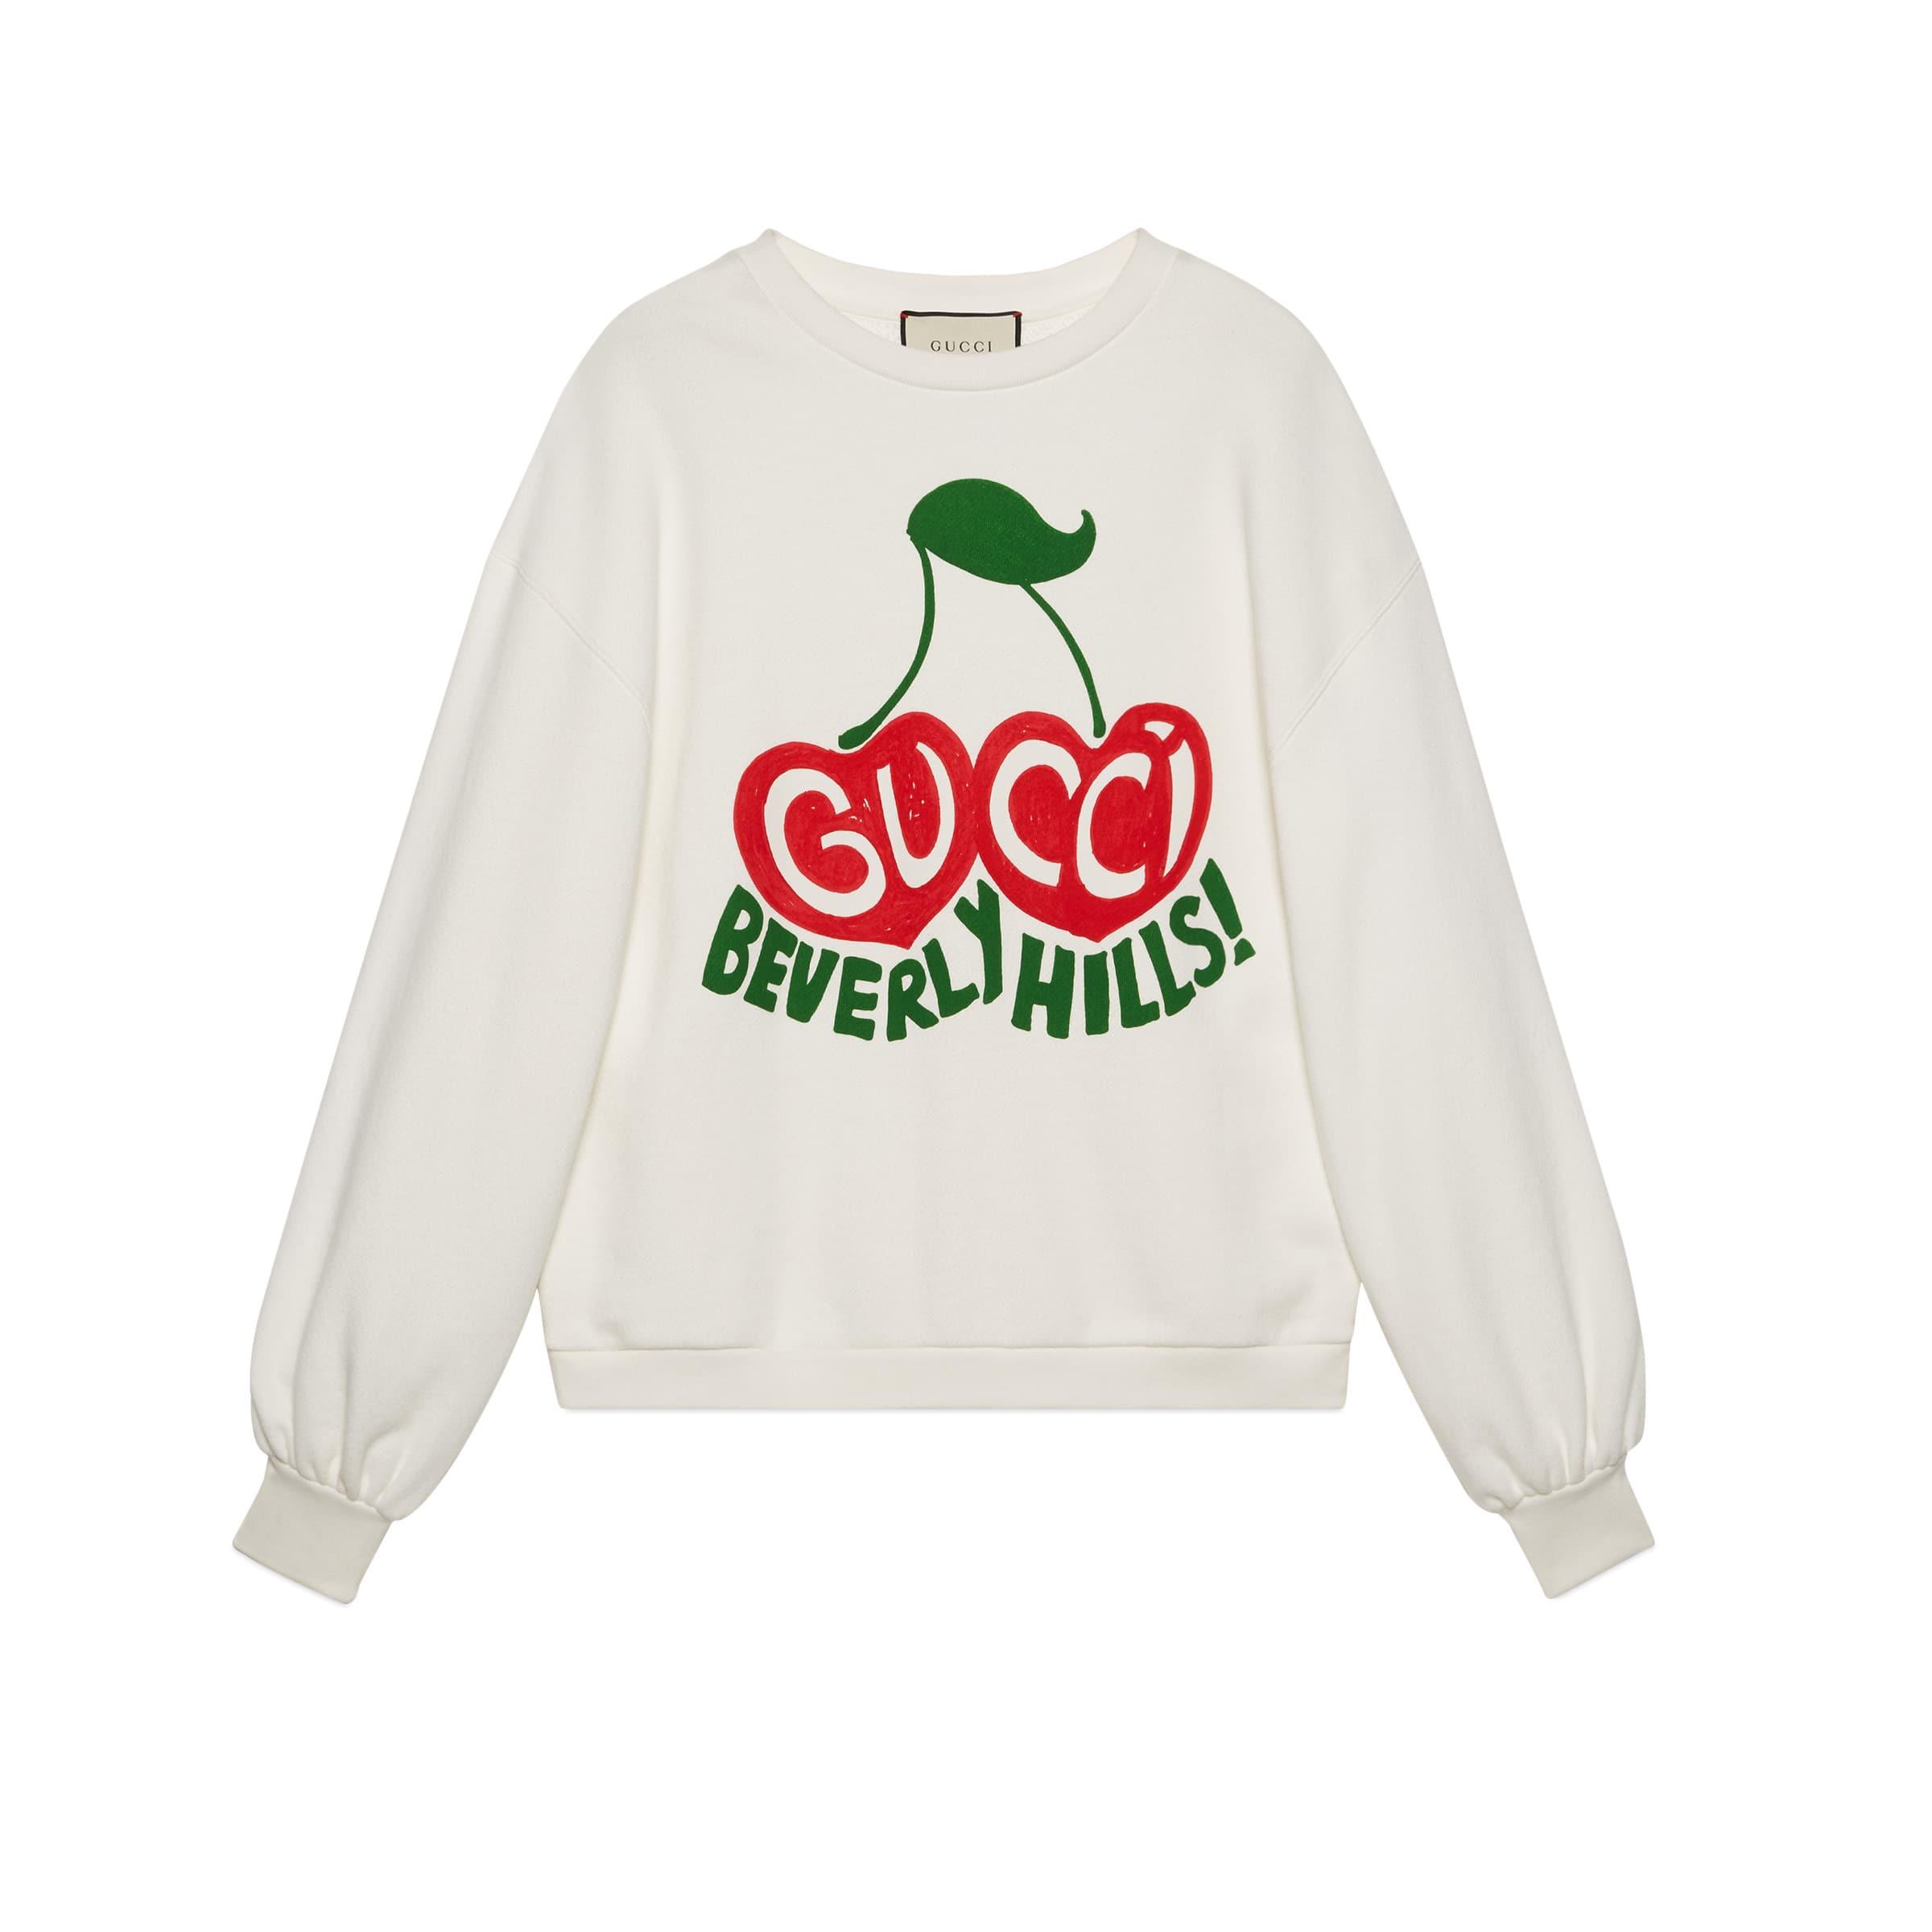 Gucci "beverly Hills" Cherry Print Sweatshirt in White | Lyst